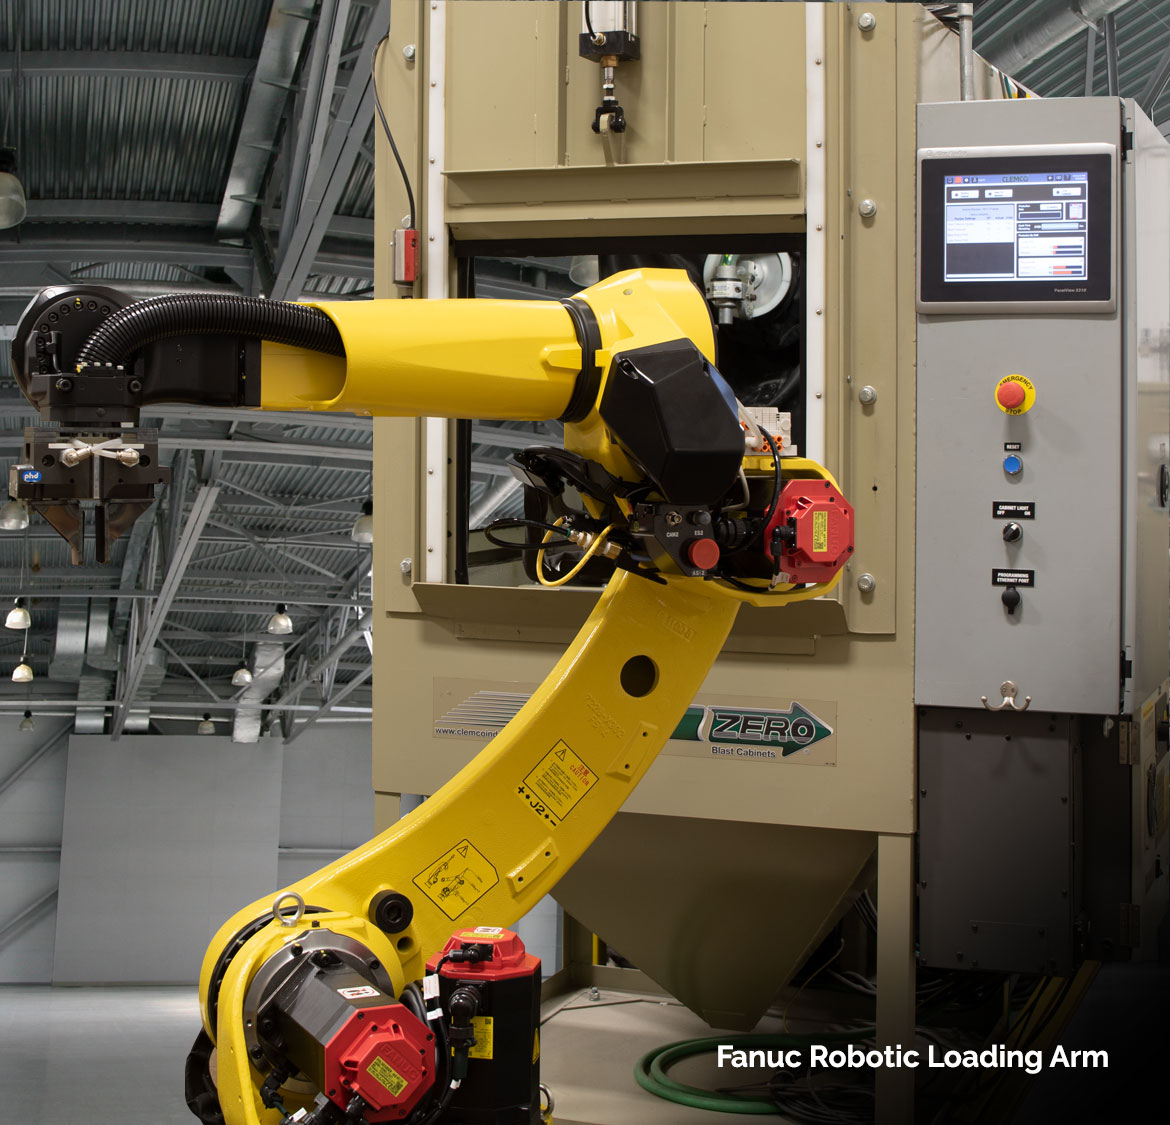 Fanuc Robotic Loading Arm, Sandblast Cabinets